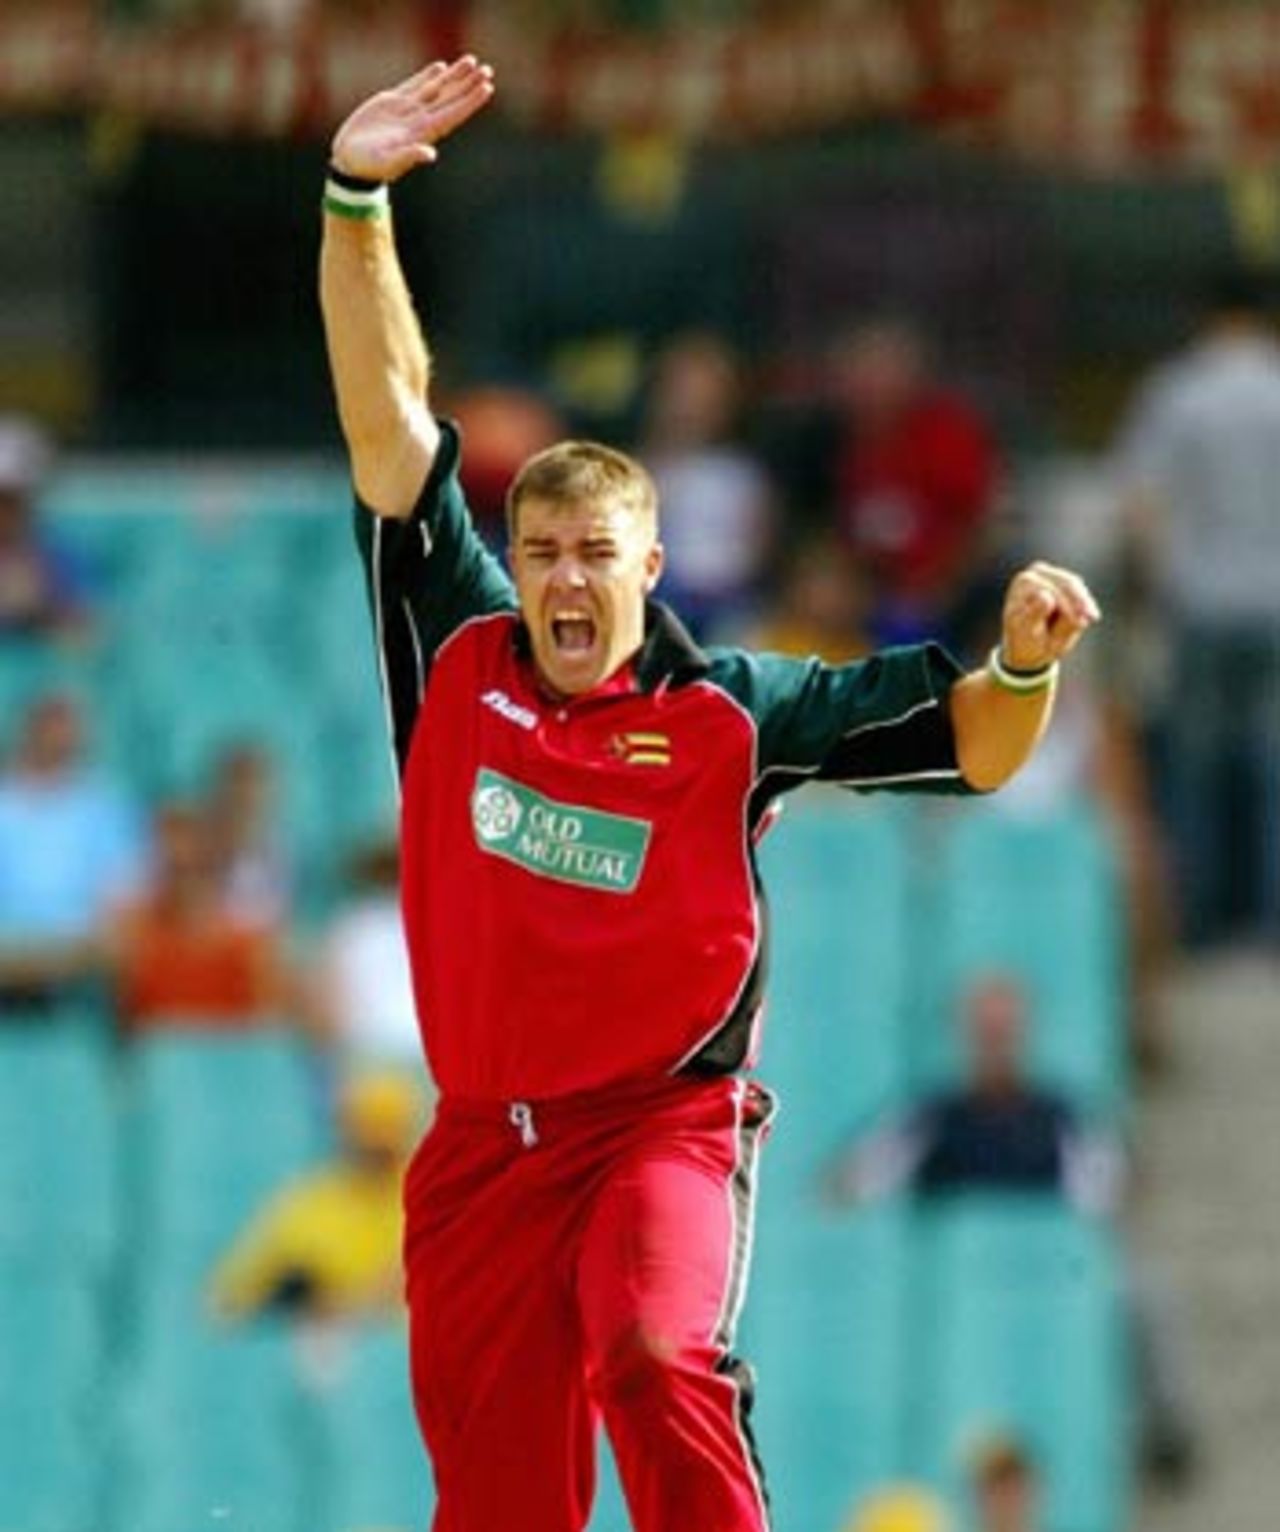 Heath Streak celebrates the wicket of Matthew Hayden, Australia v Zimbabwe, VB Series, 2nd ODI, Sydney, January 11, 2004